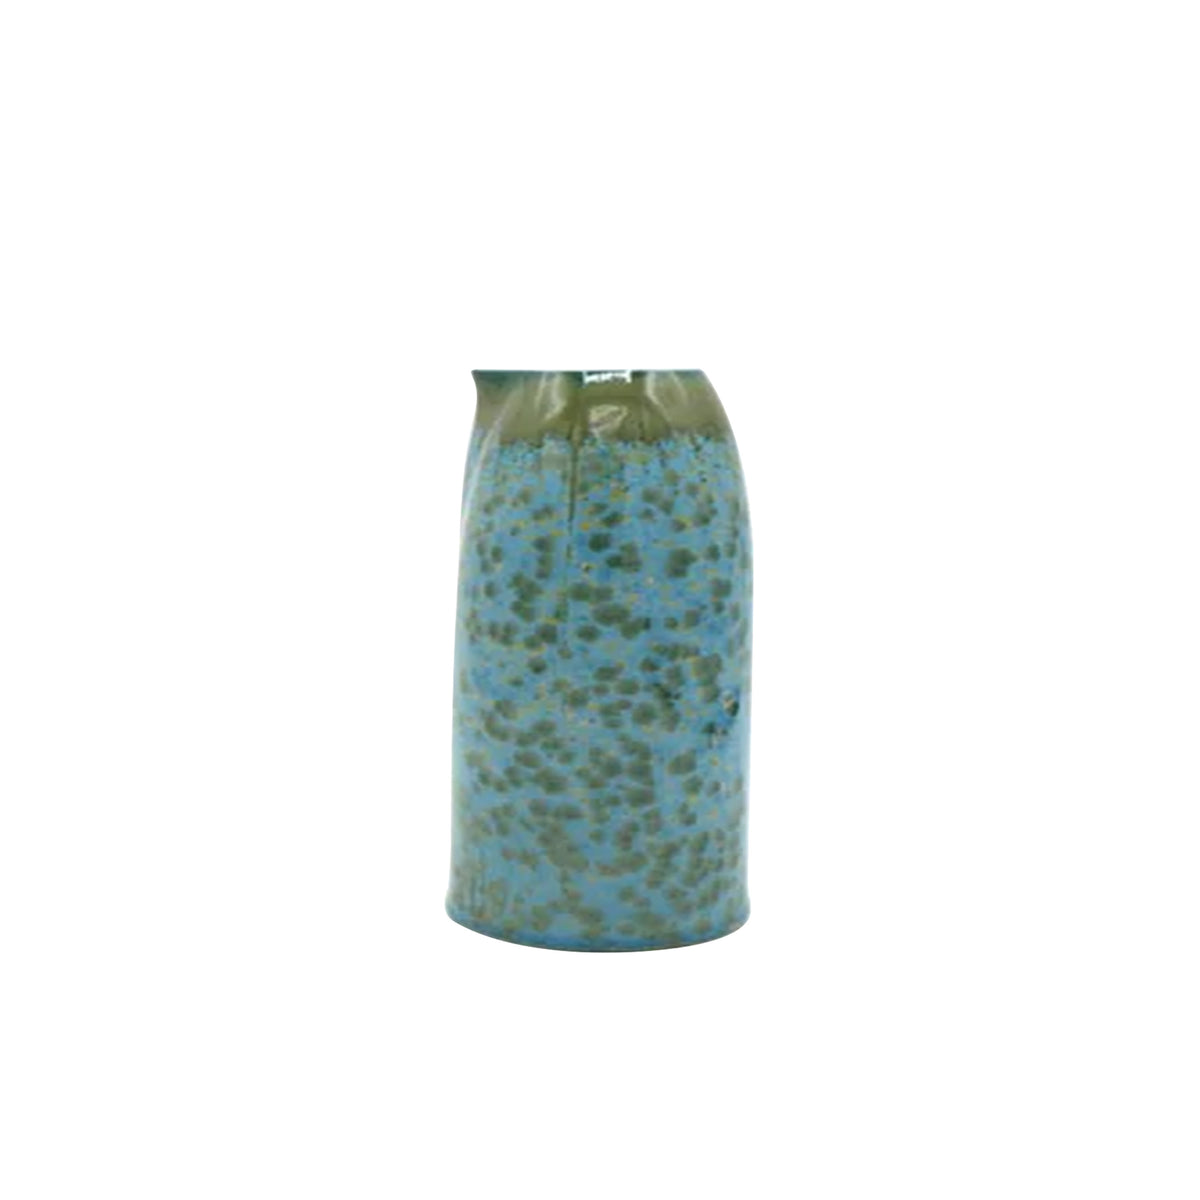 NYMPHEA - Sake jug, small